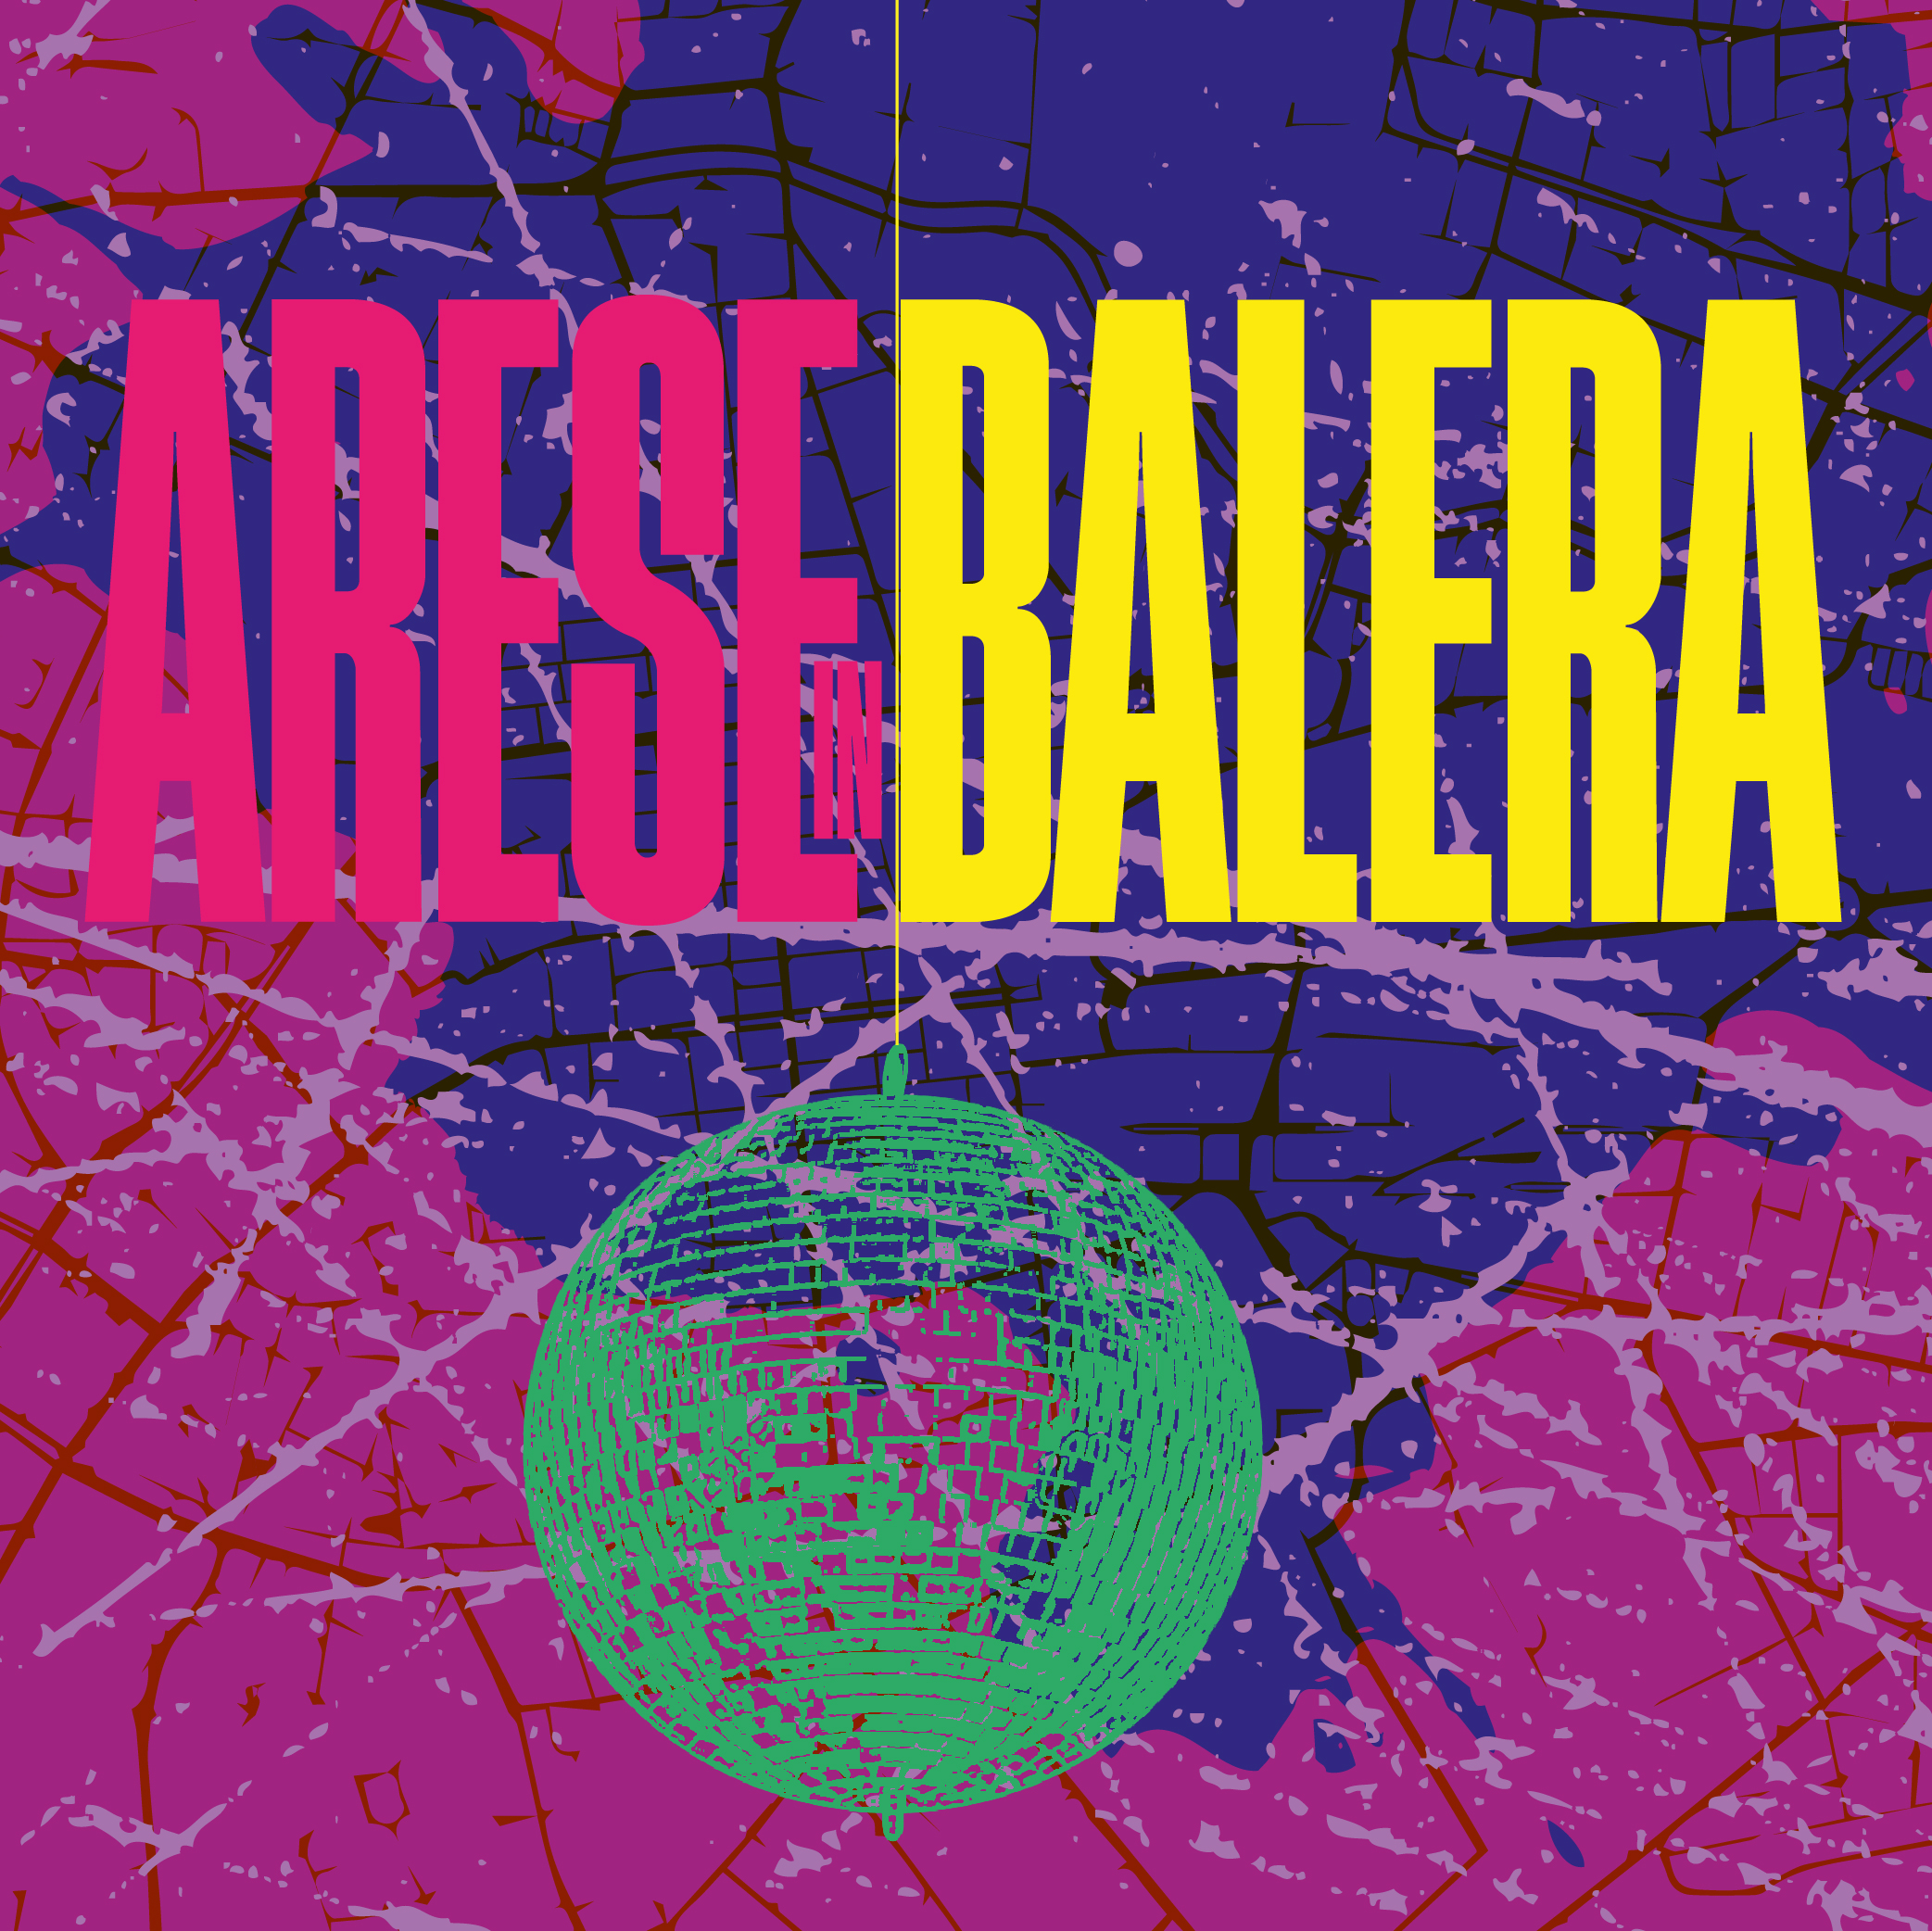 Arese in Balera